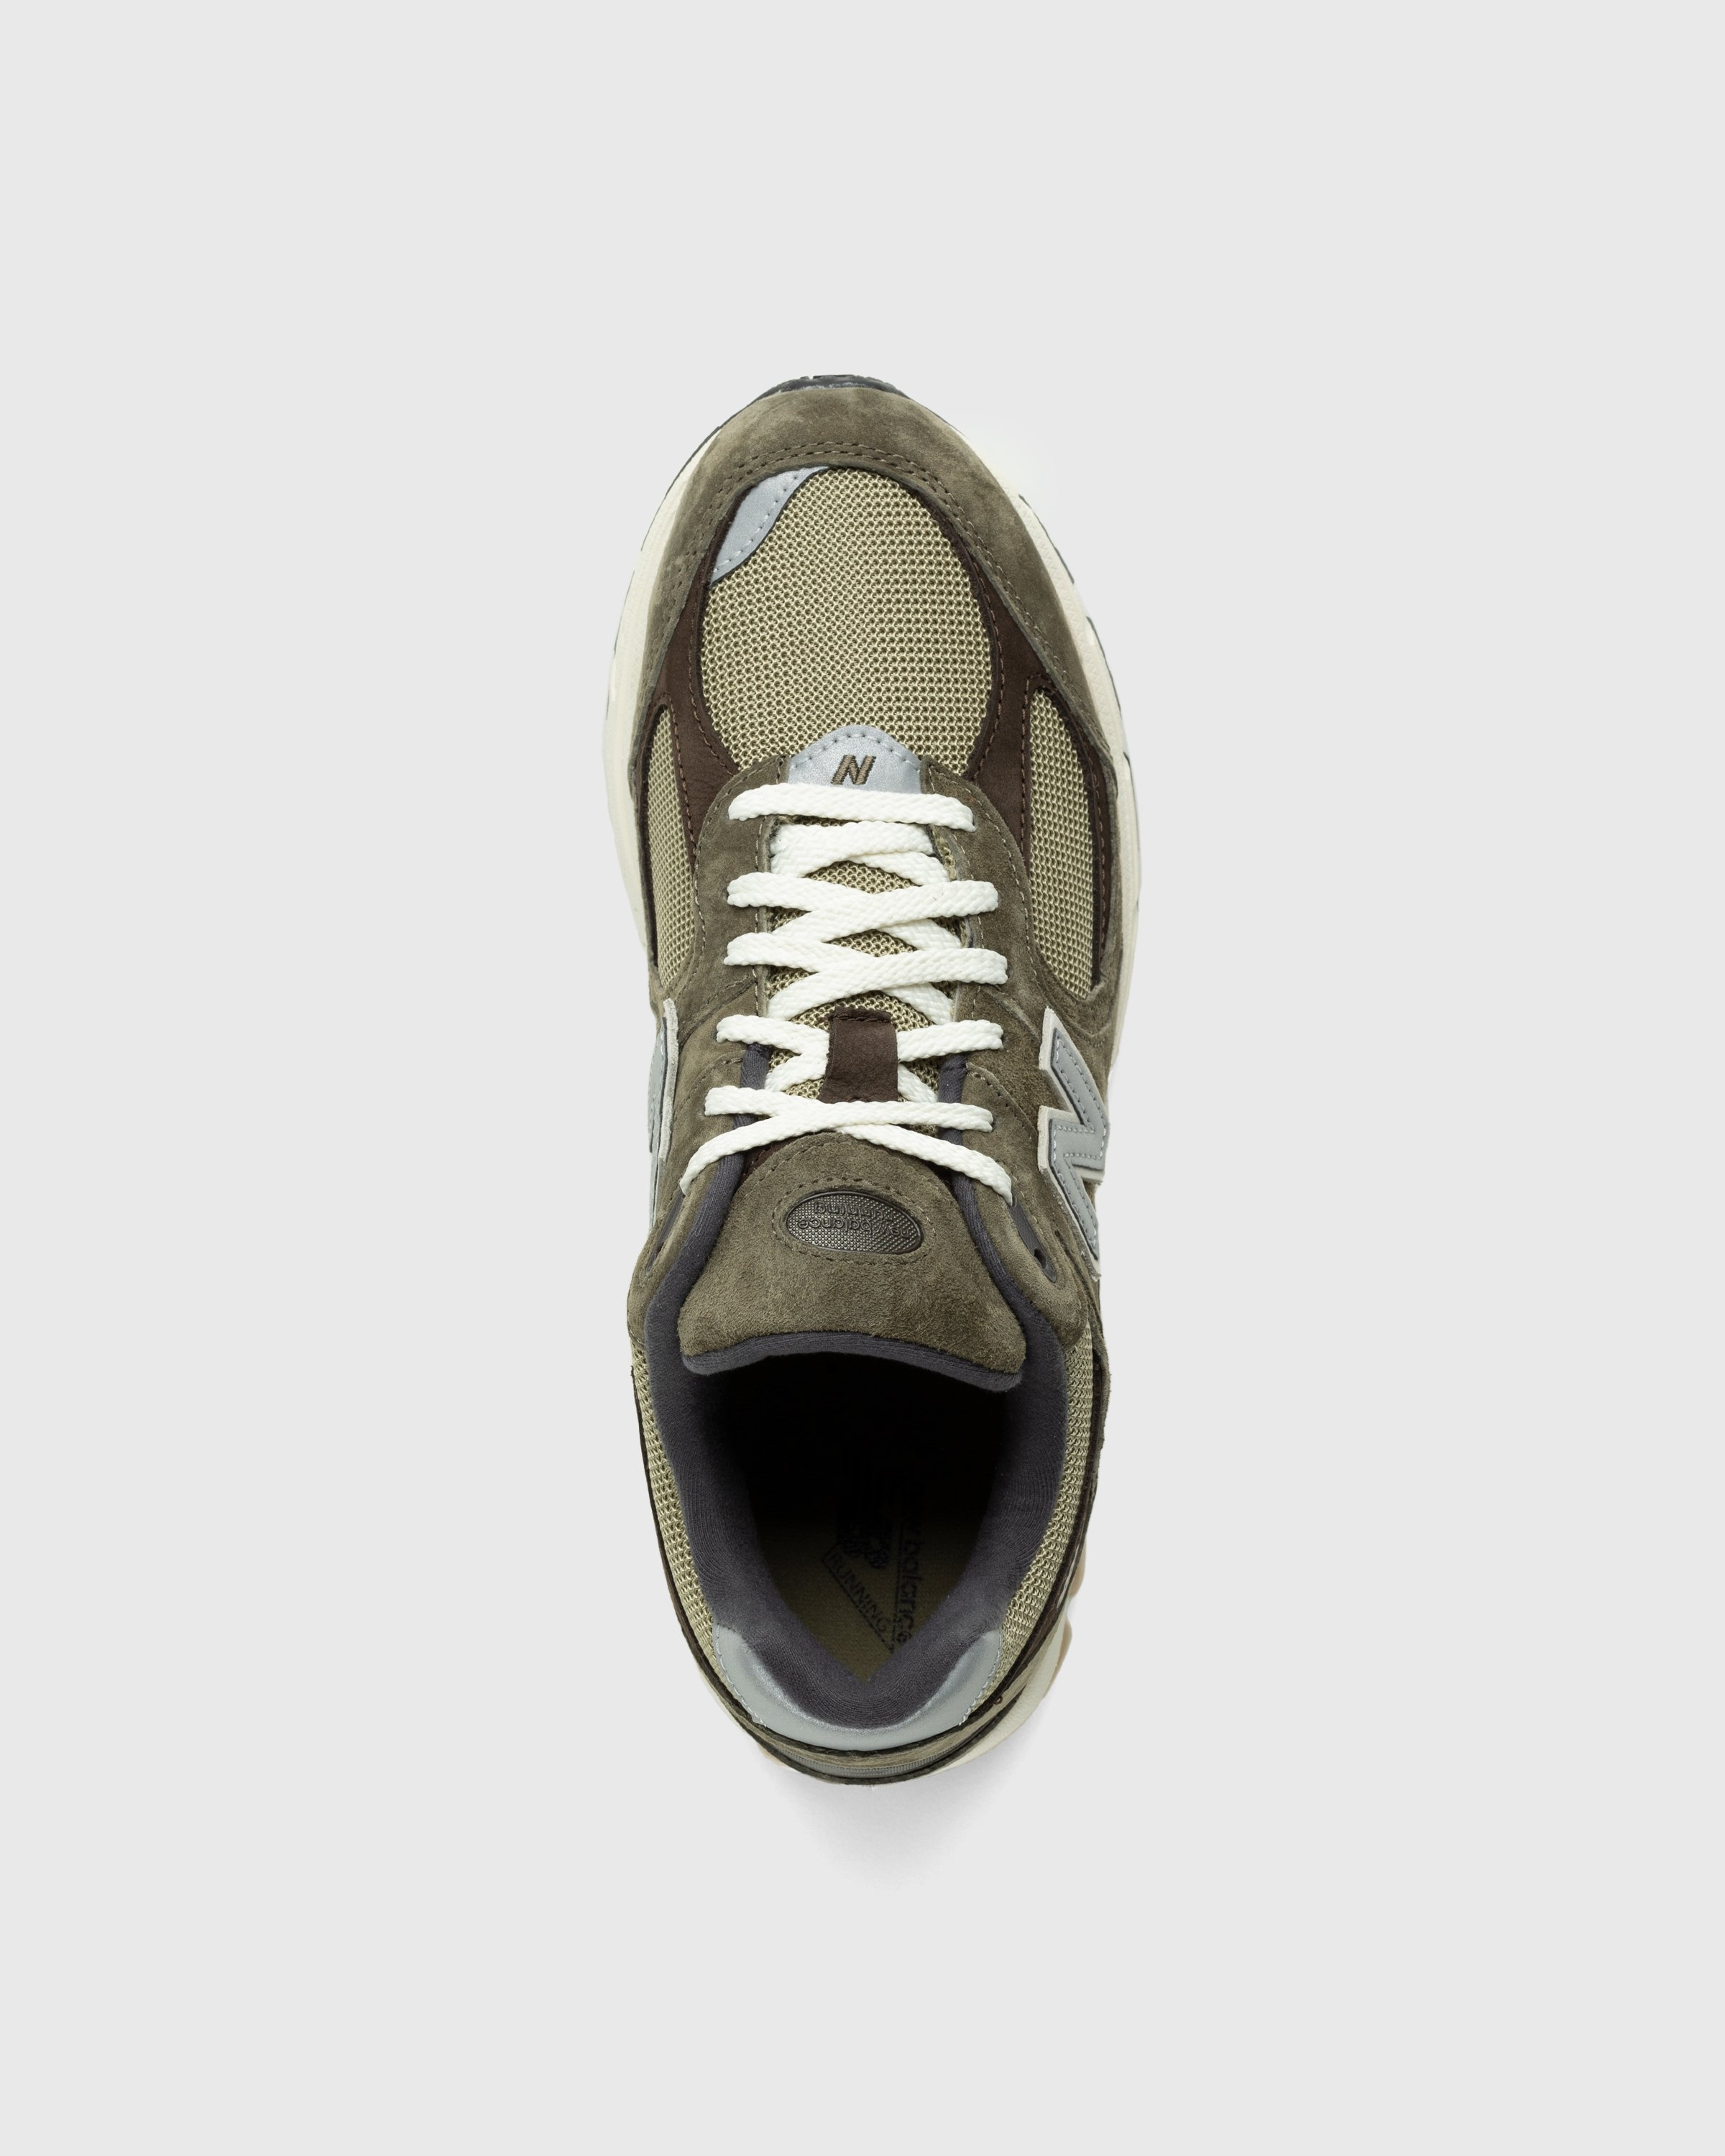 New Balance – M2002RHN Dark Camo - Low Top Sneakers - Green - Image 5